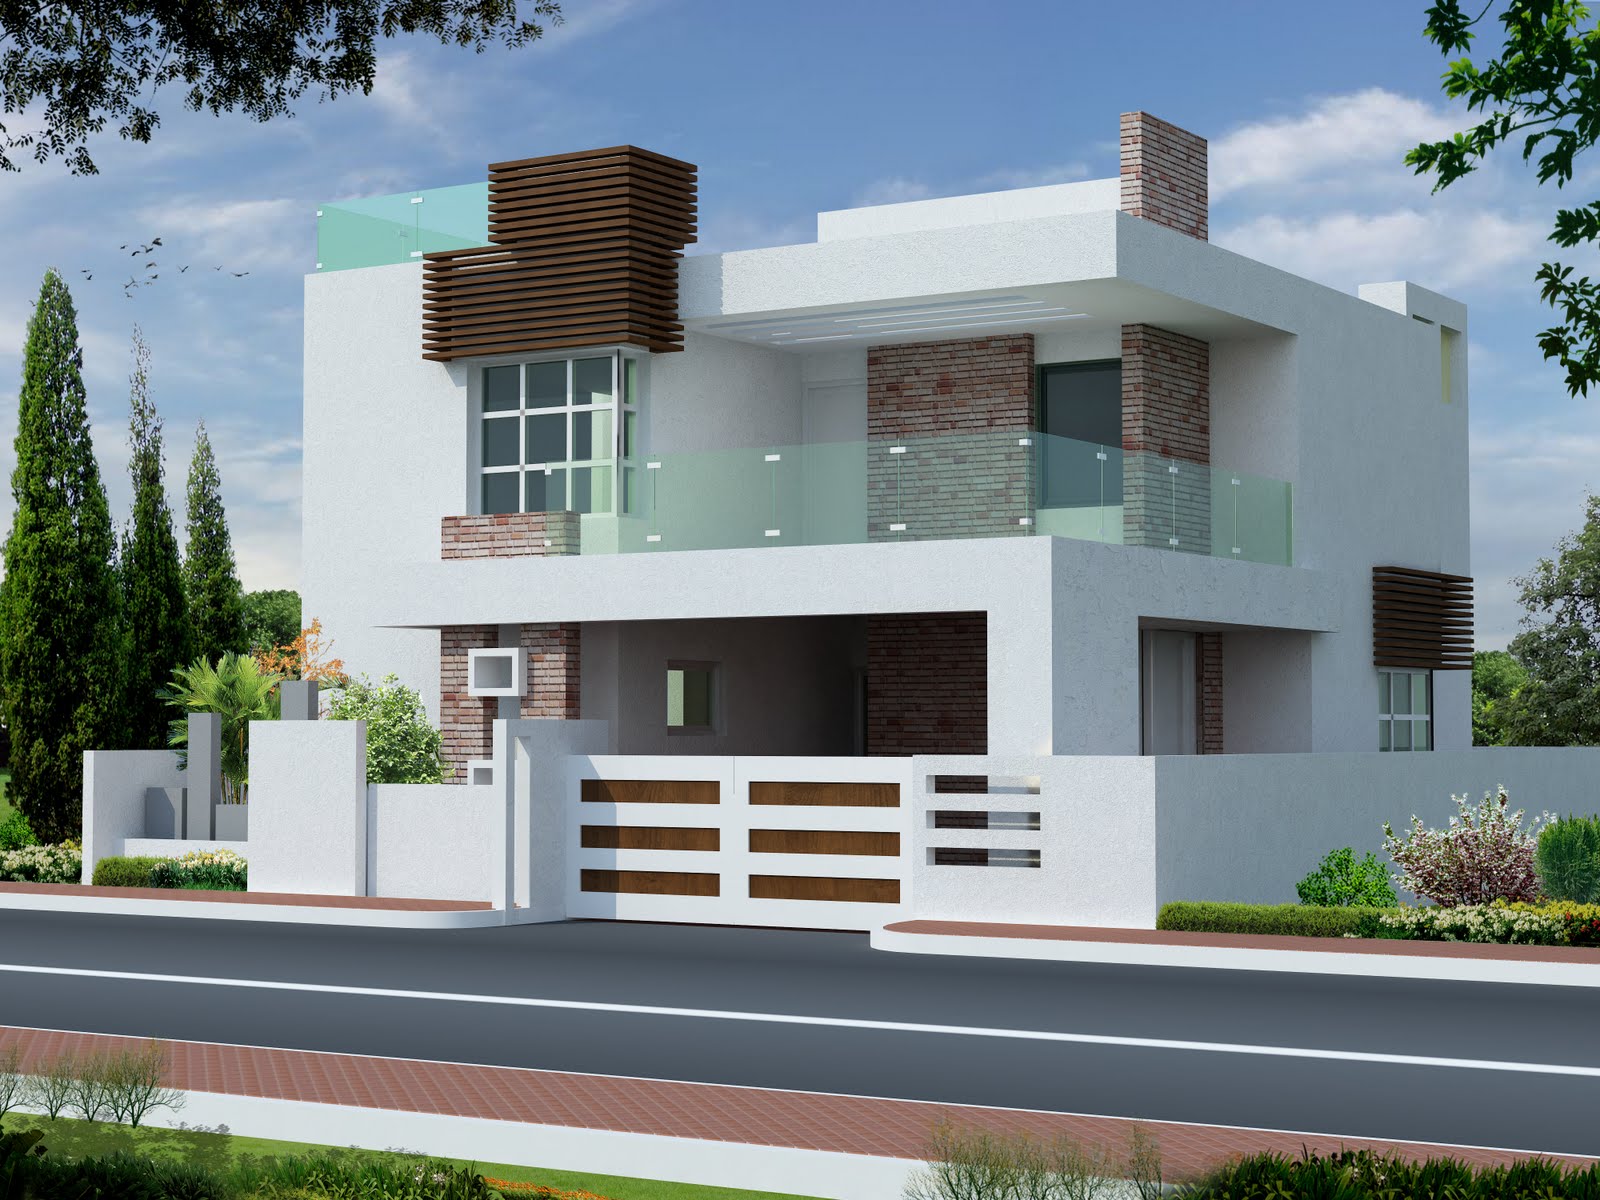  House  Plans  With Photos Hyderabad Joy Studio Design 